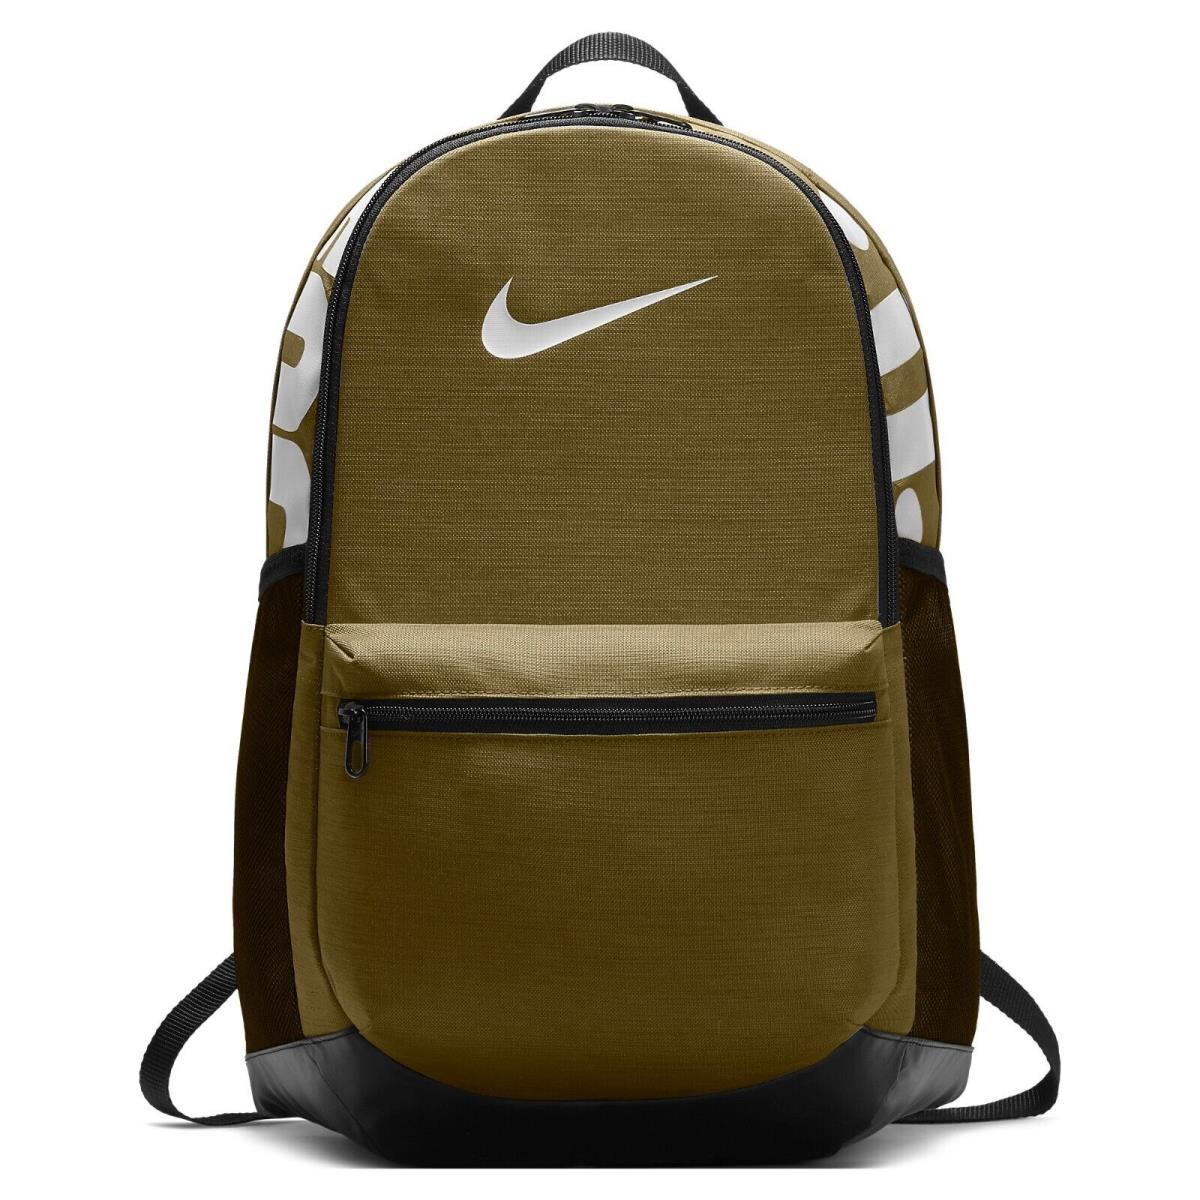 Nike Brasilia Medium Training Backpack BA5329-399 Olive/black/white 1465 CU IN